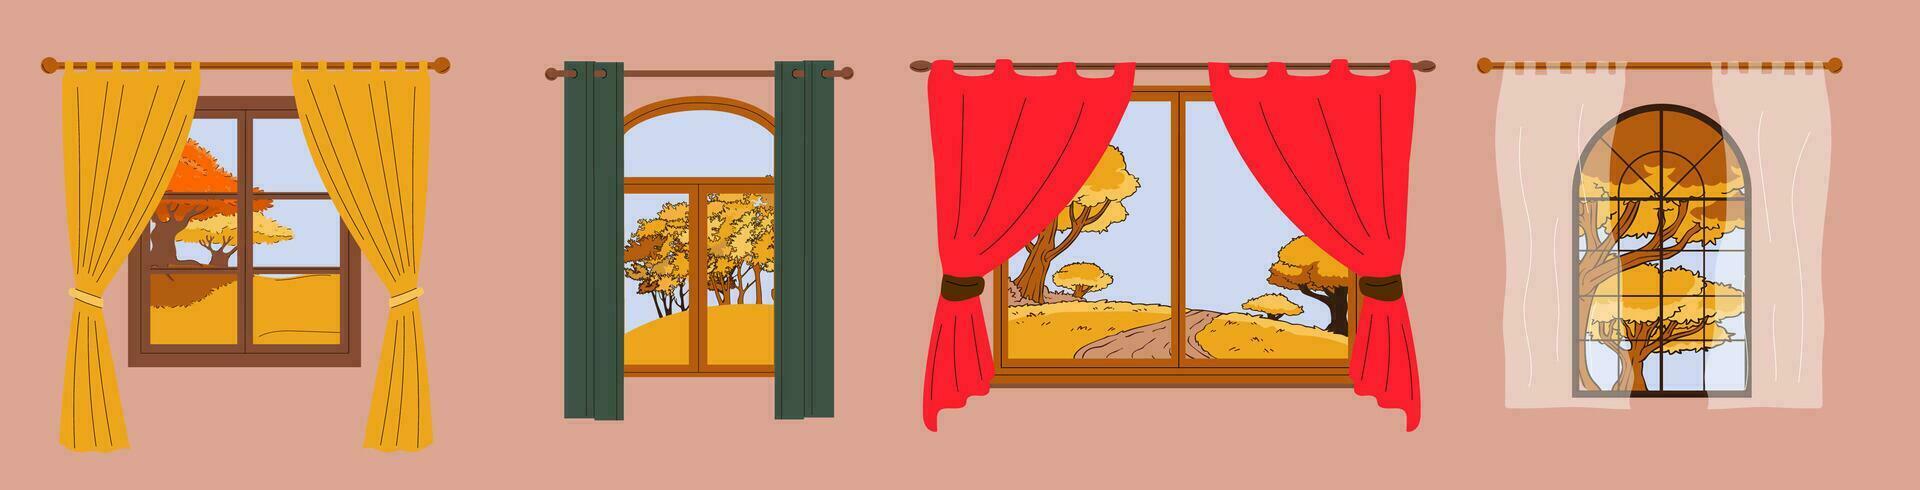 Set of Autumn windows. Window with autumn view. Fall season. Hygge concept. Cozy autumn days vector